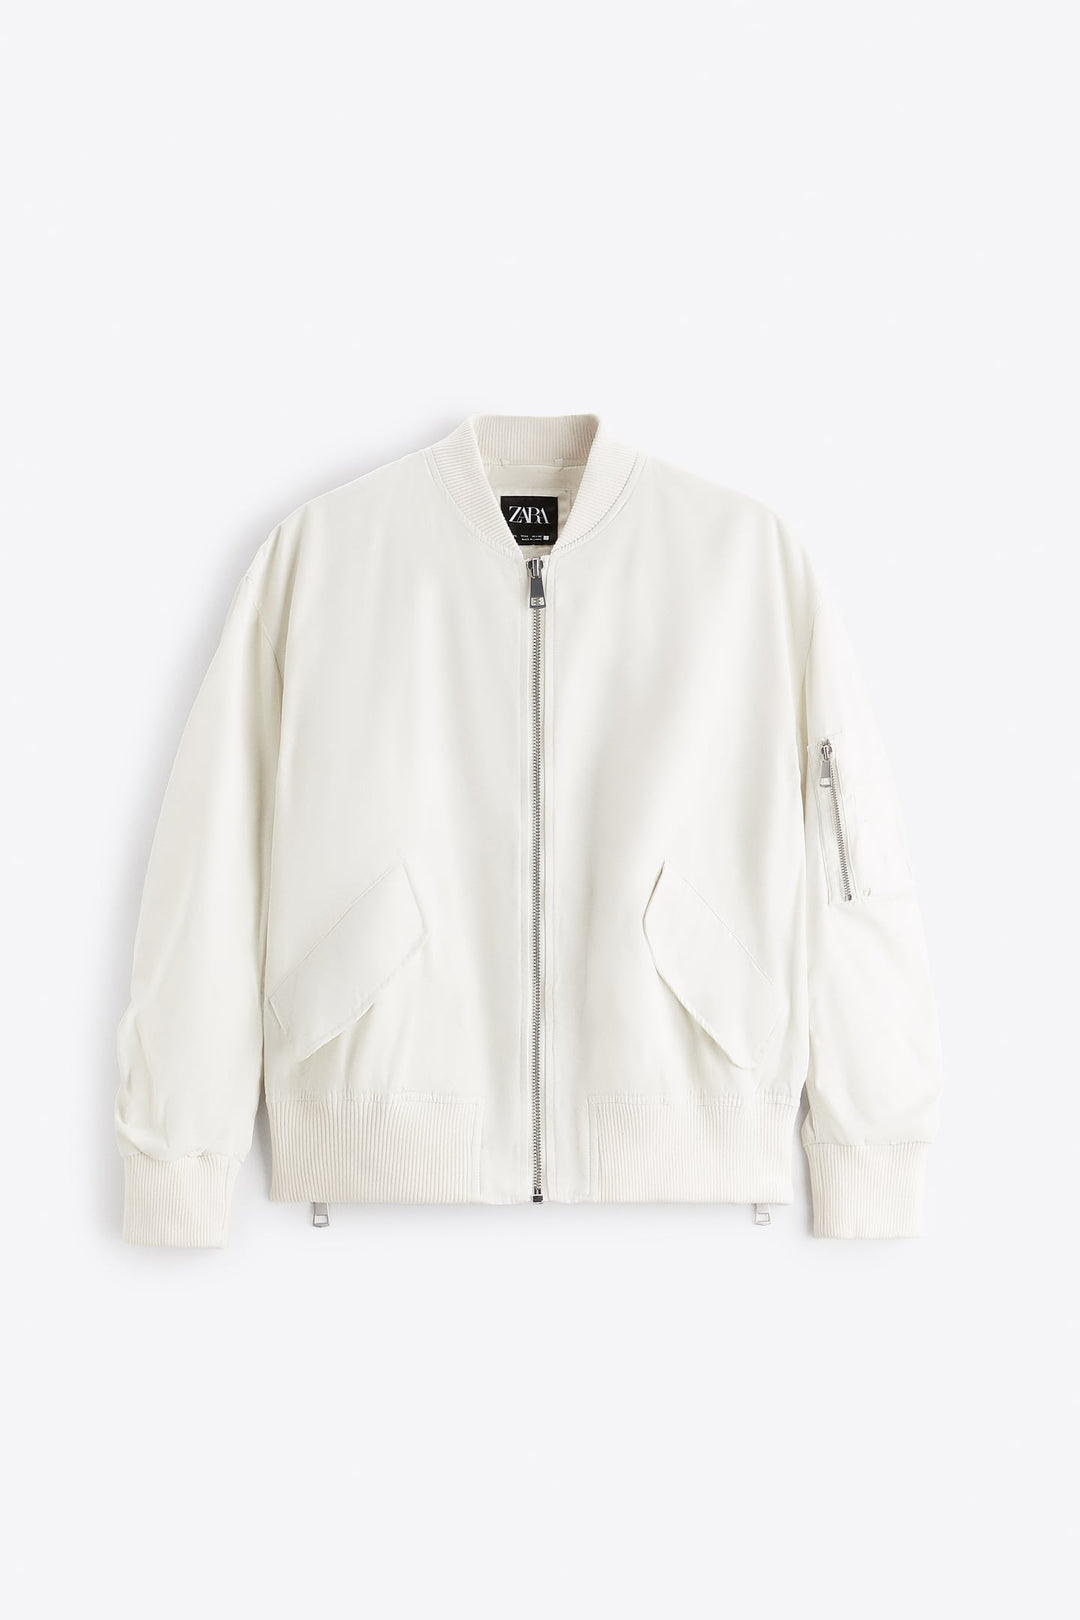 Zara Mens L/S Jacket 8281/531/251